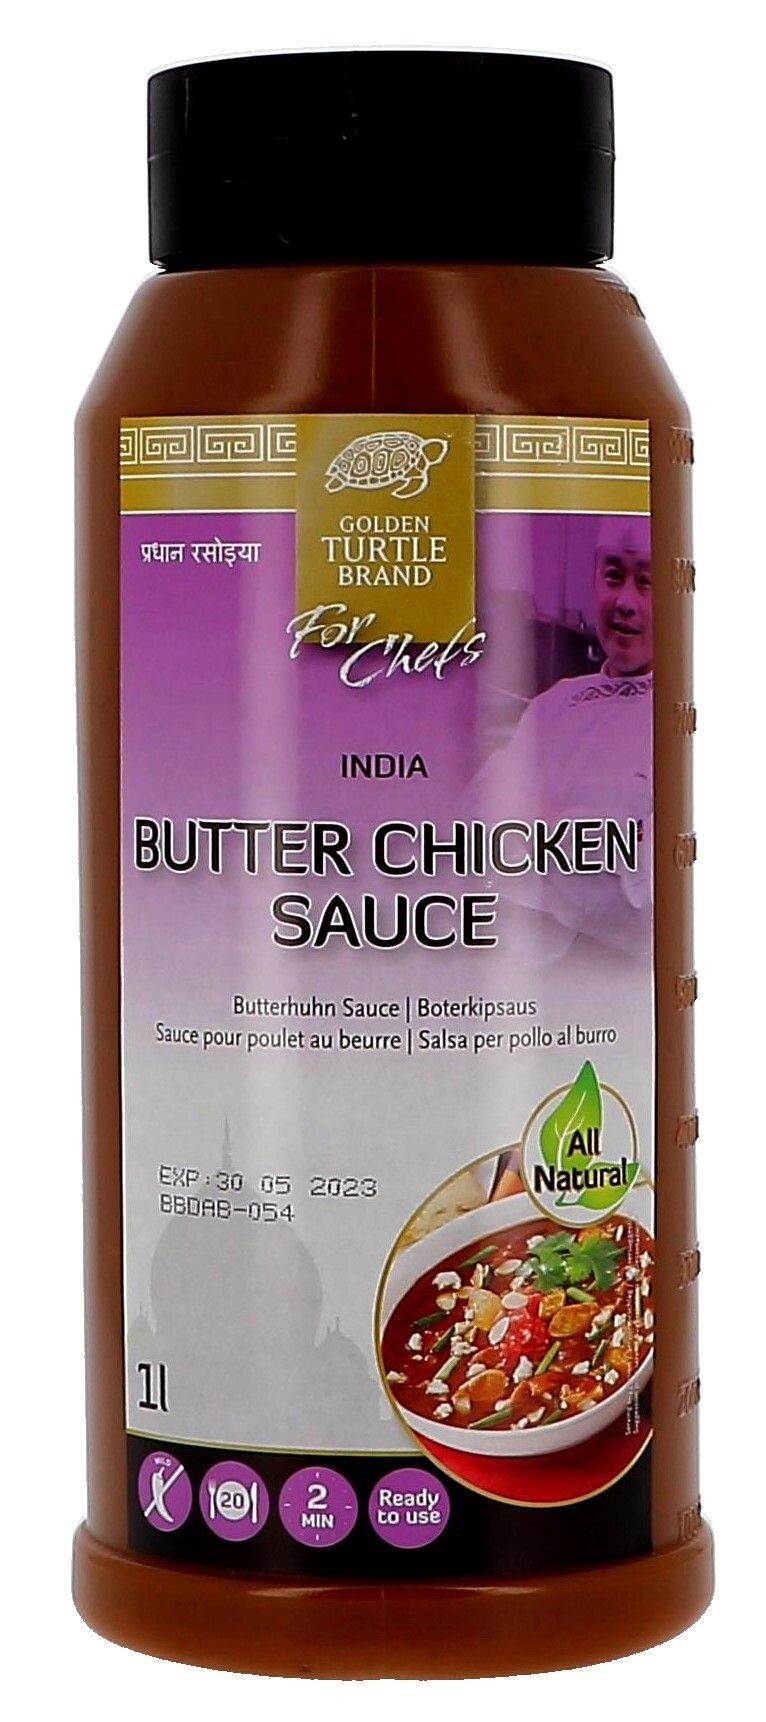 Butter Chicken Sauce 1L Golden Turtle Brand for Chefs